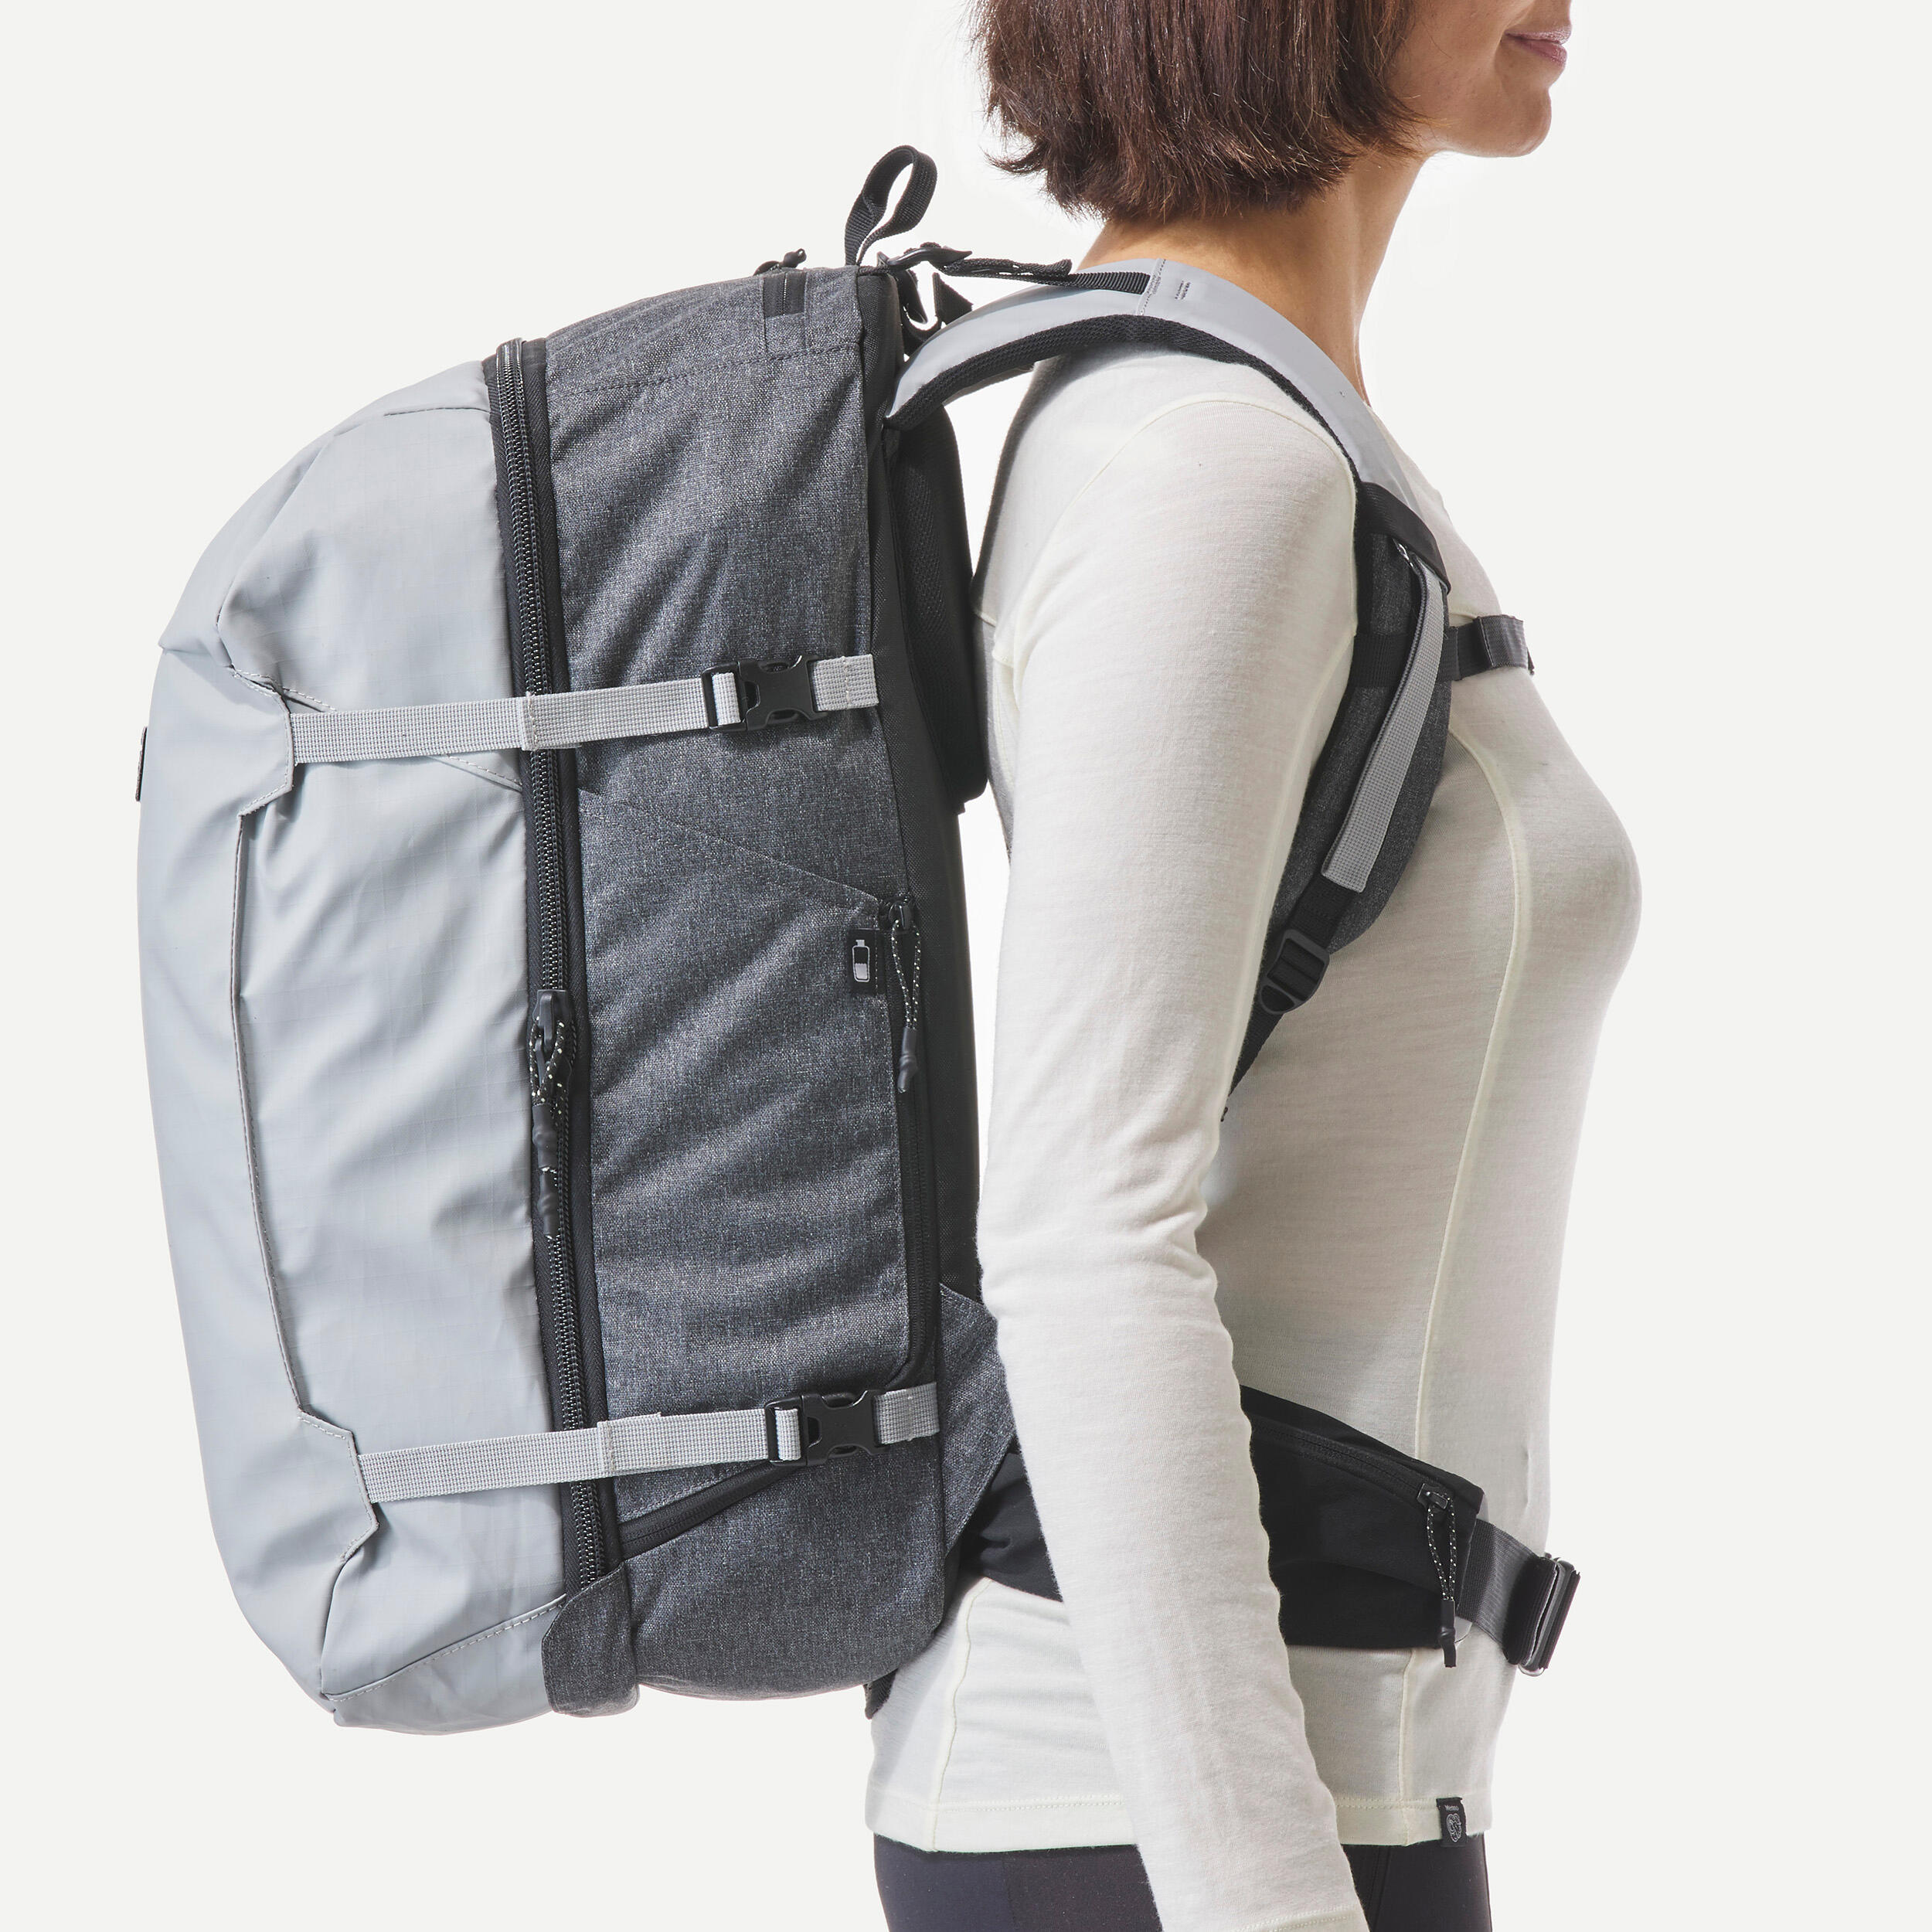 Travel Backpack 40 L - Travel 500 ORGANIZER Grey 9/10